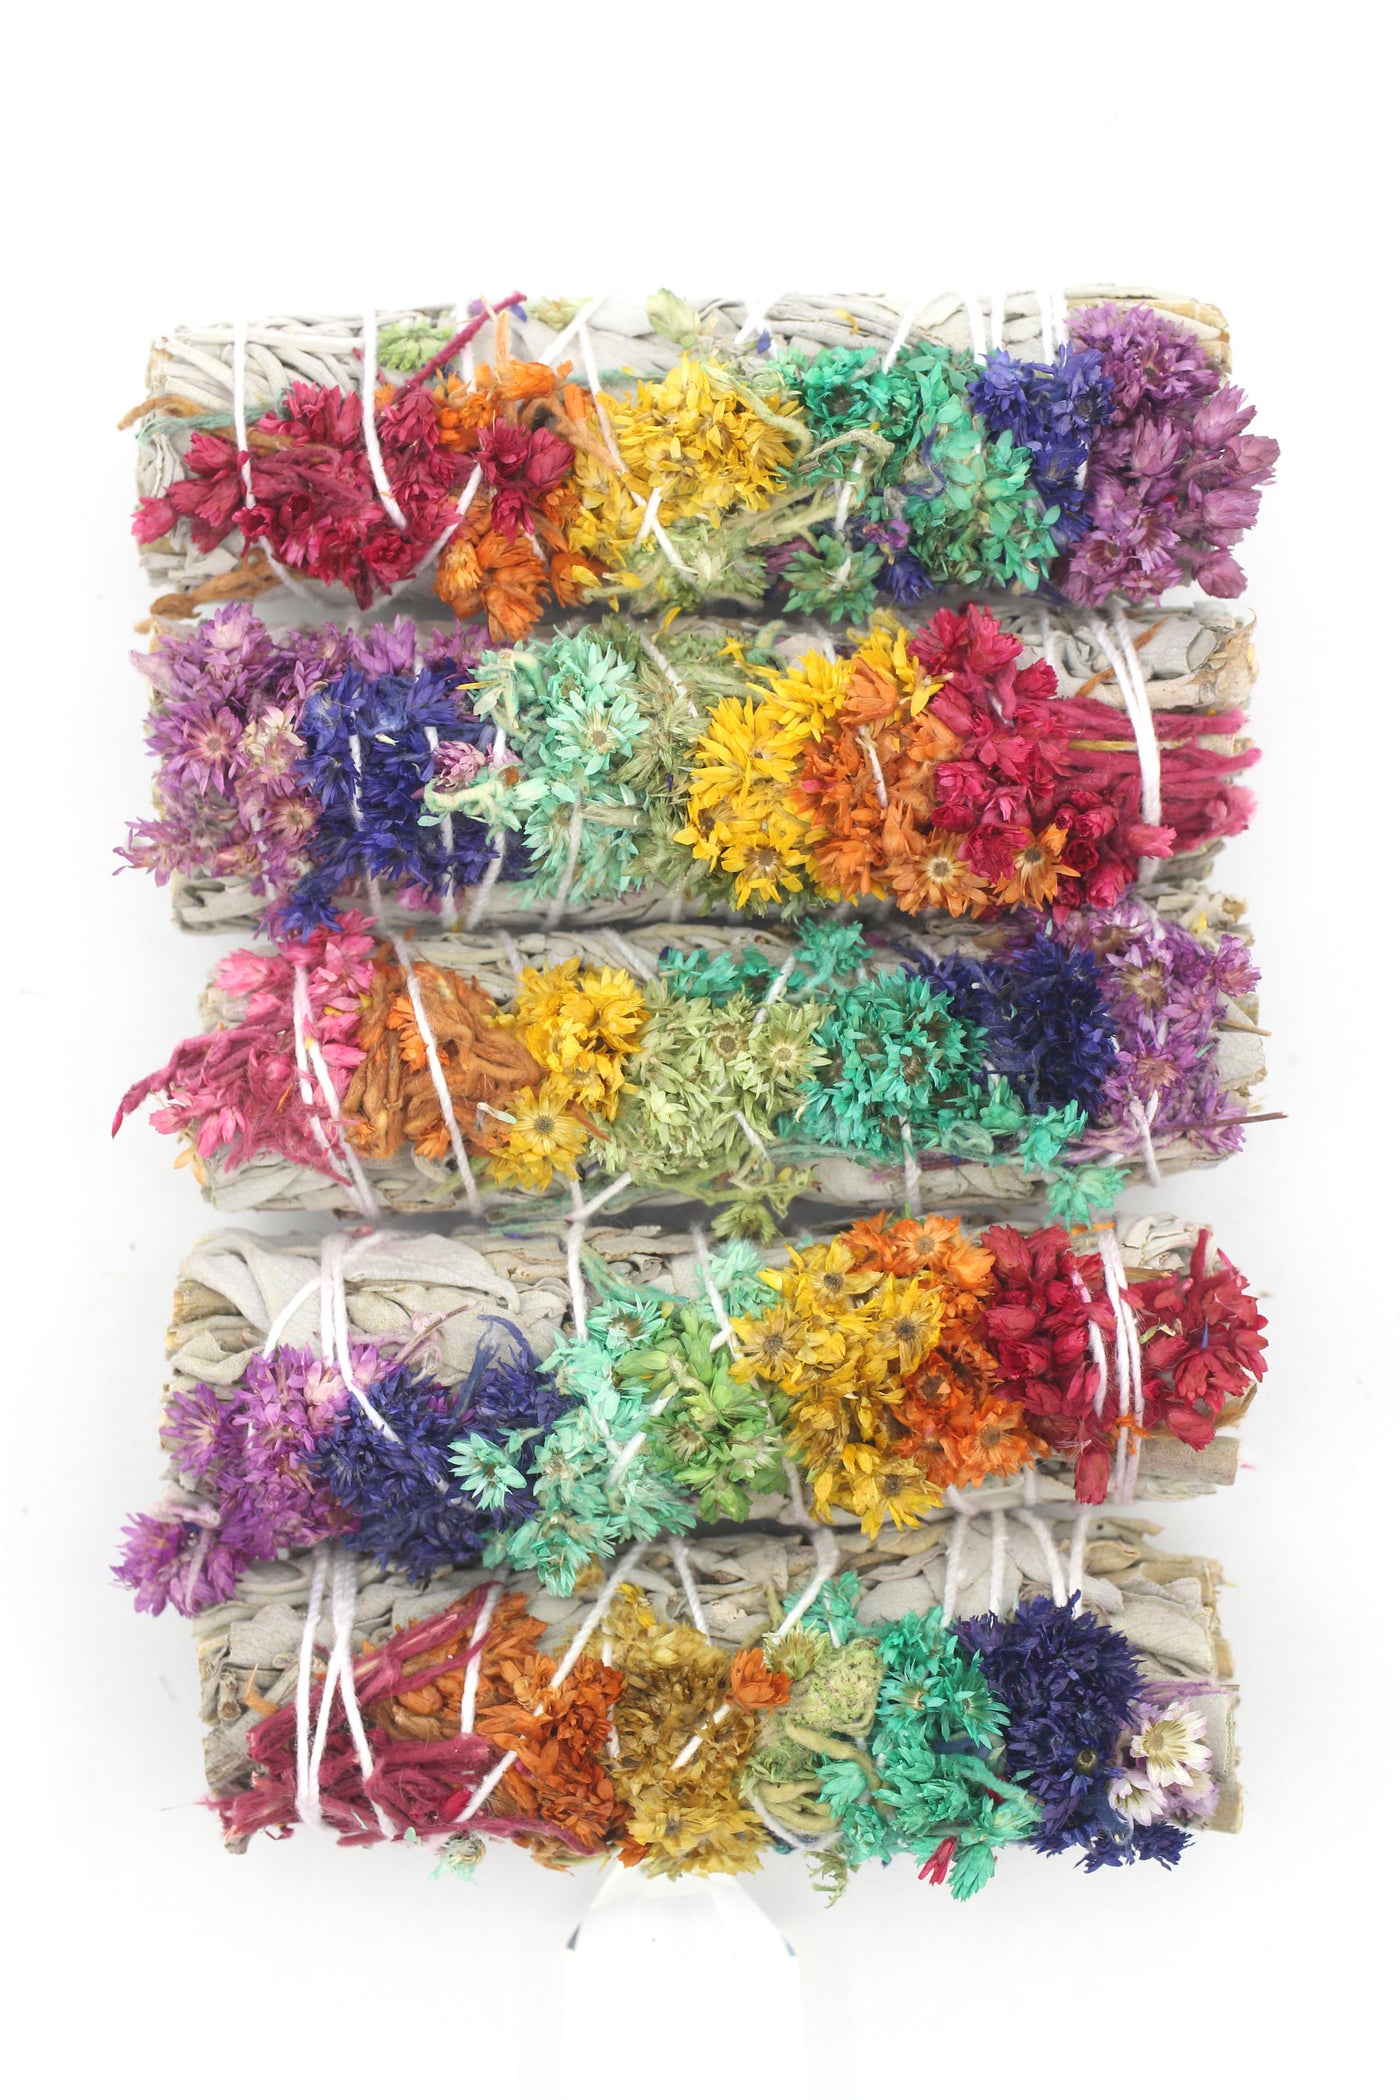 Floral Smudge Stick Wand: Rainbow Chakra Flowers, Sage, Good Juju, Meditation